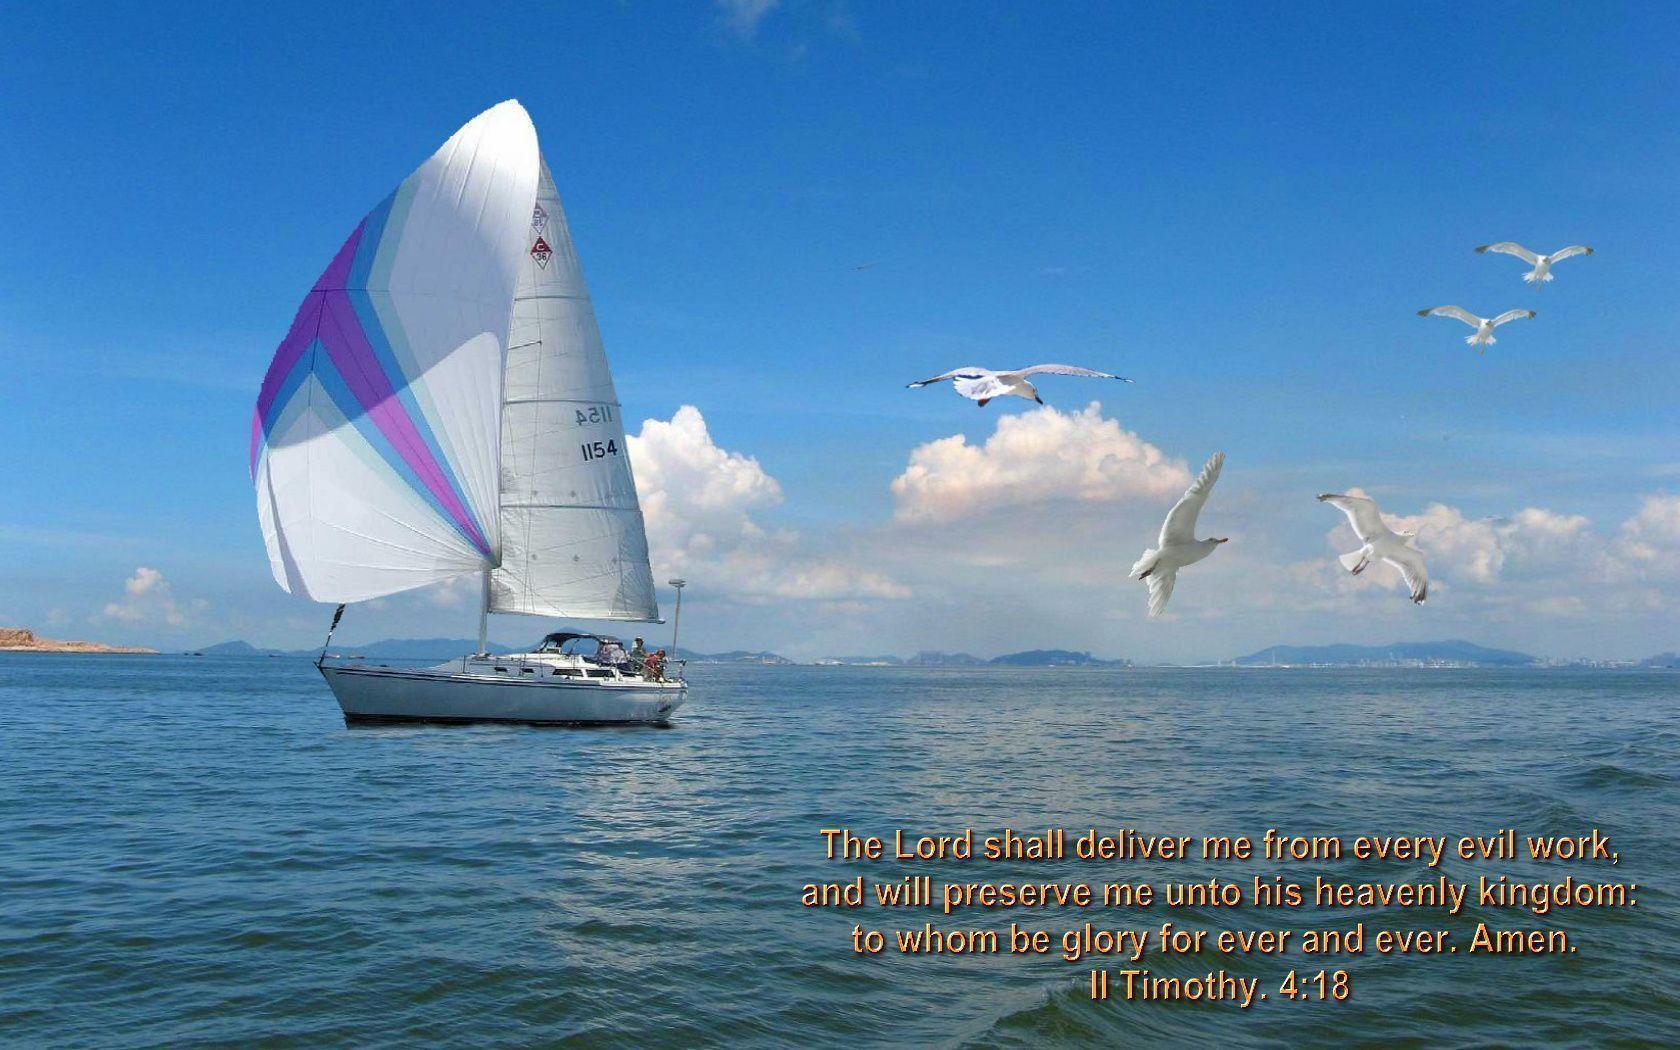 Bible verses sailing wallpaper « Christian Wallpaper